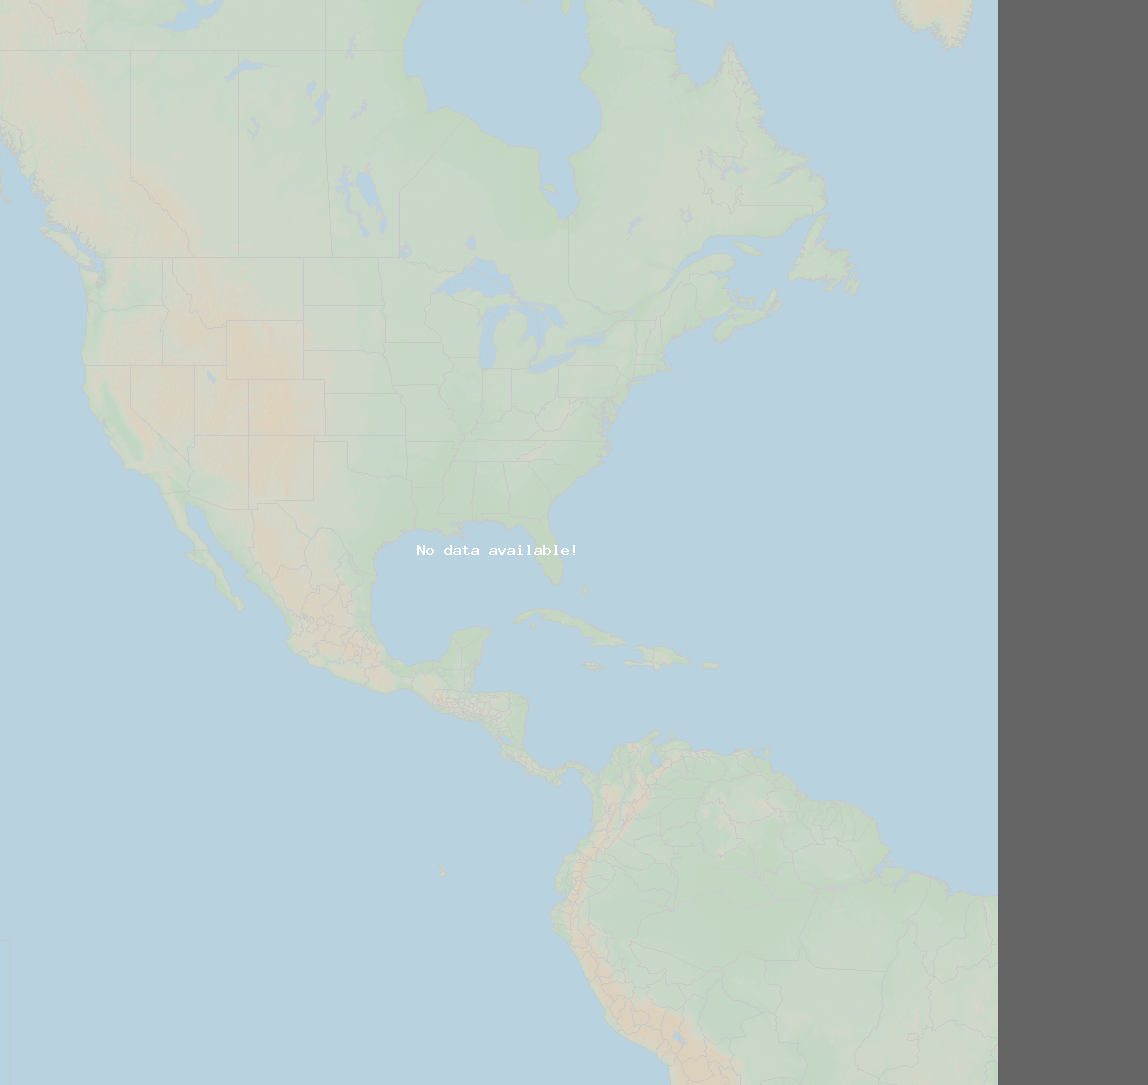 Andel blixtar (Station Haleakala) North America 2021 December